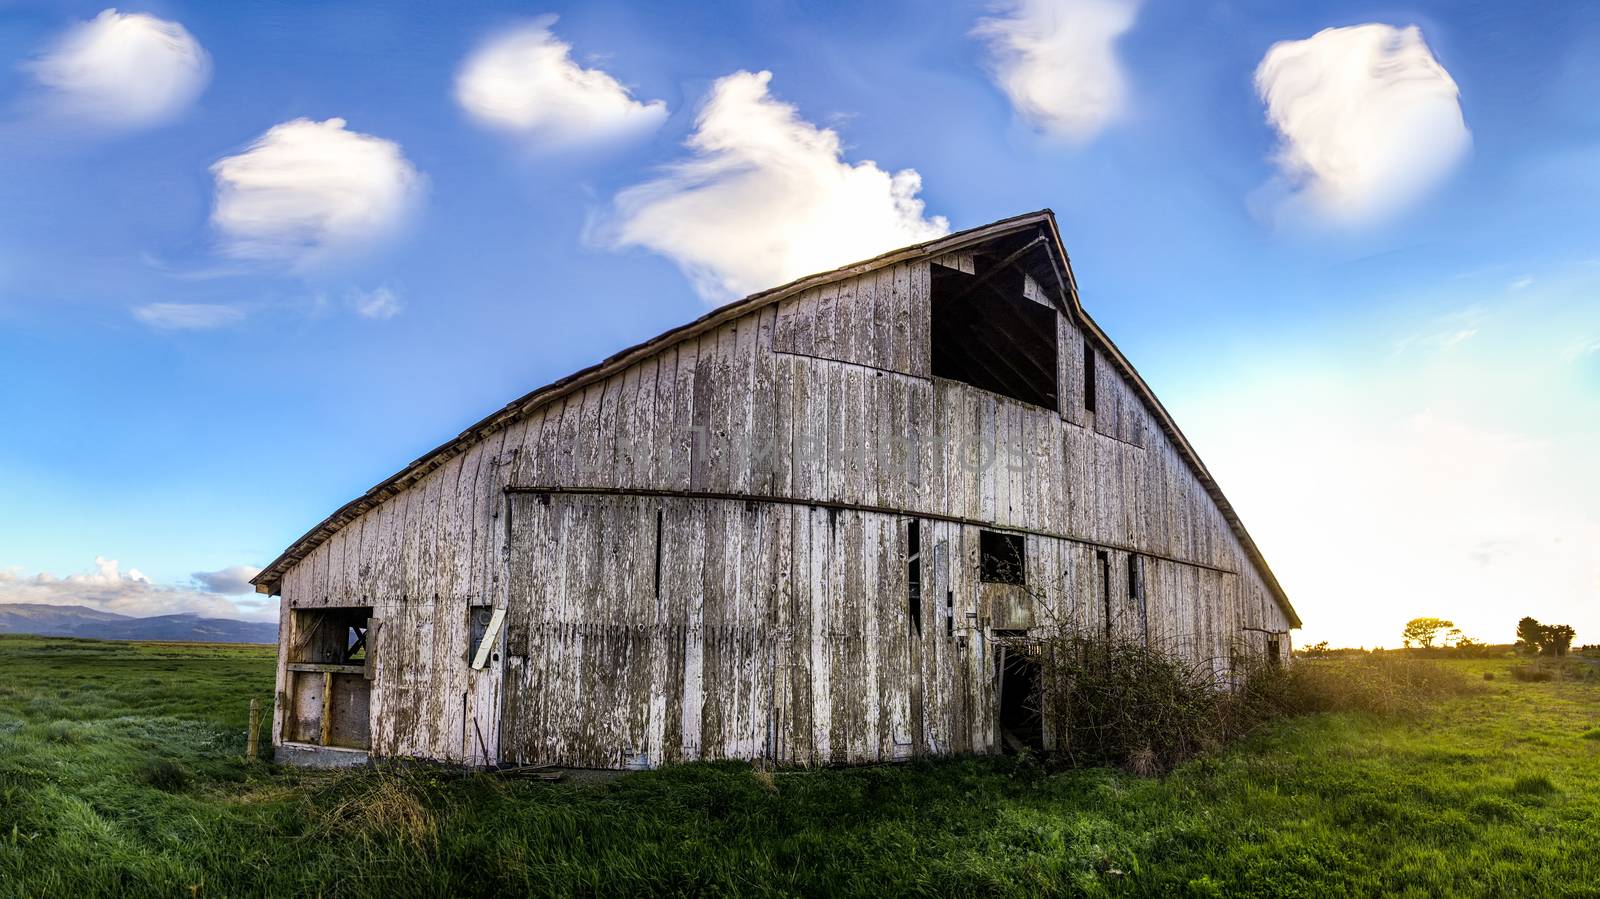 Old, Antique Barn, Farm, Landscape Image, Day